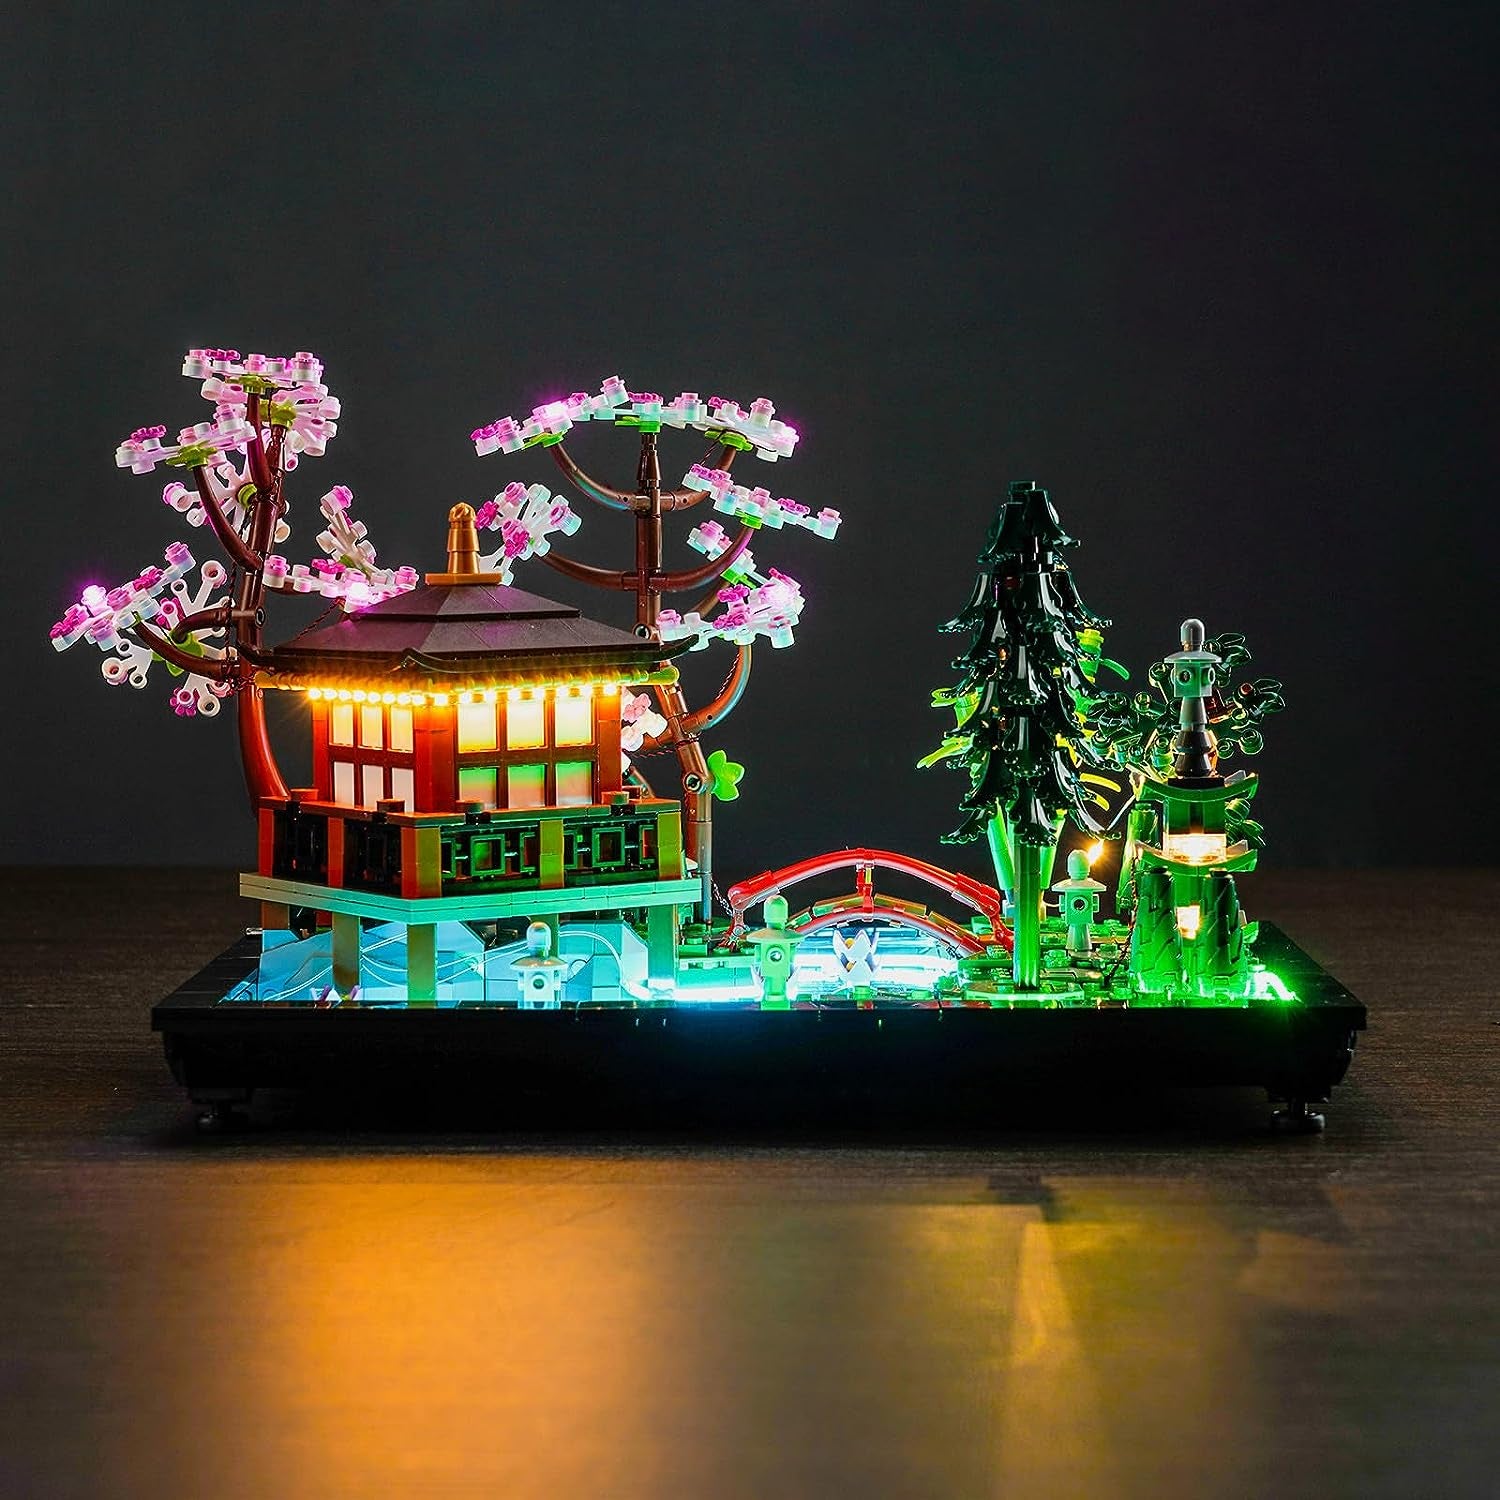 Japanese Zen Garden  Cool lego creations, Lego projects, Lego ninjago city